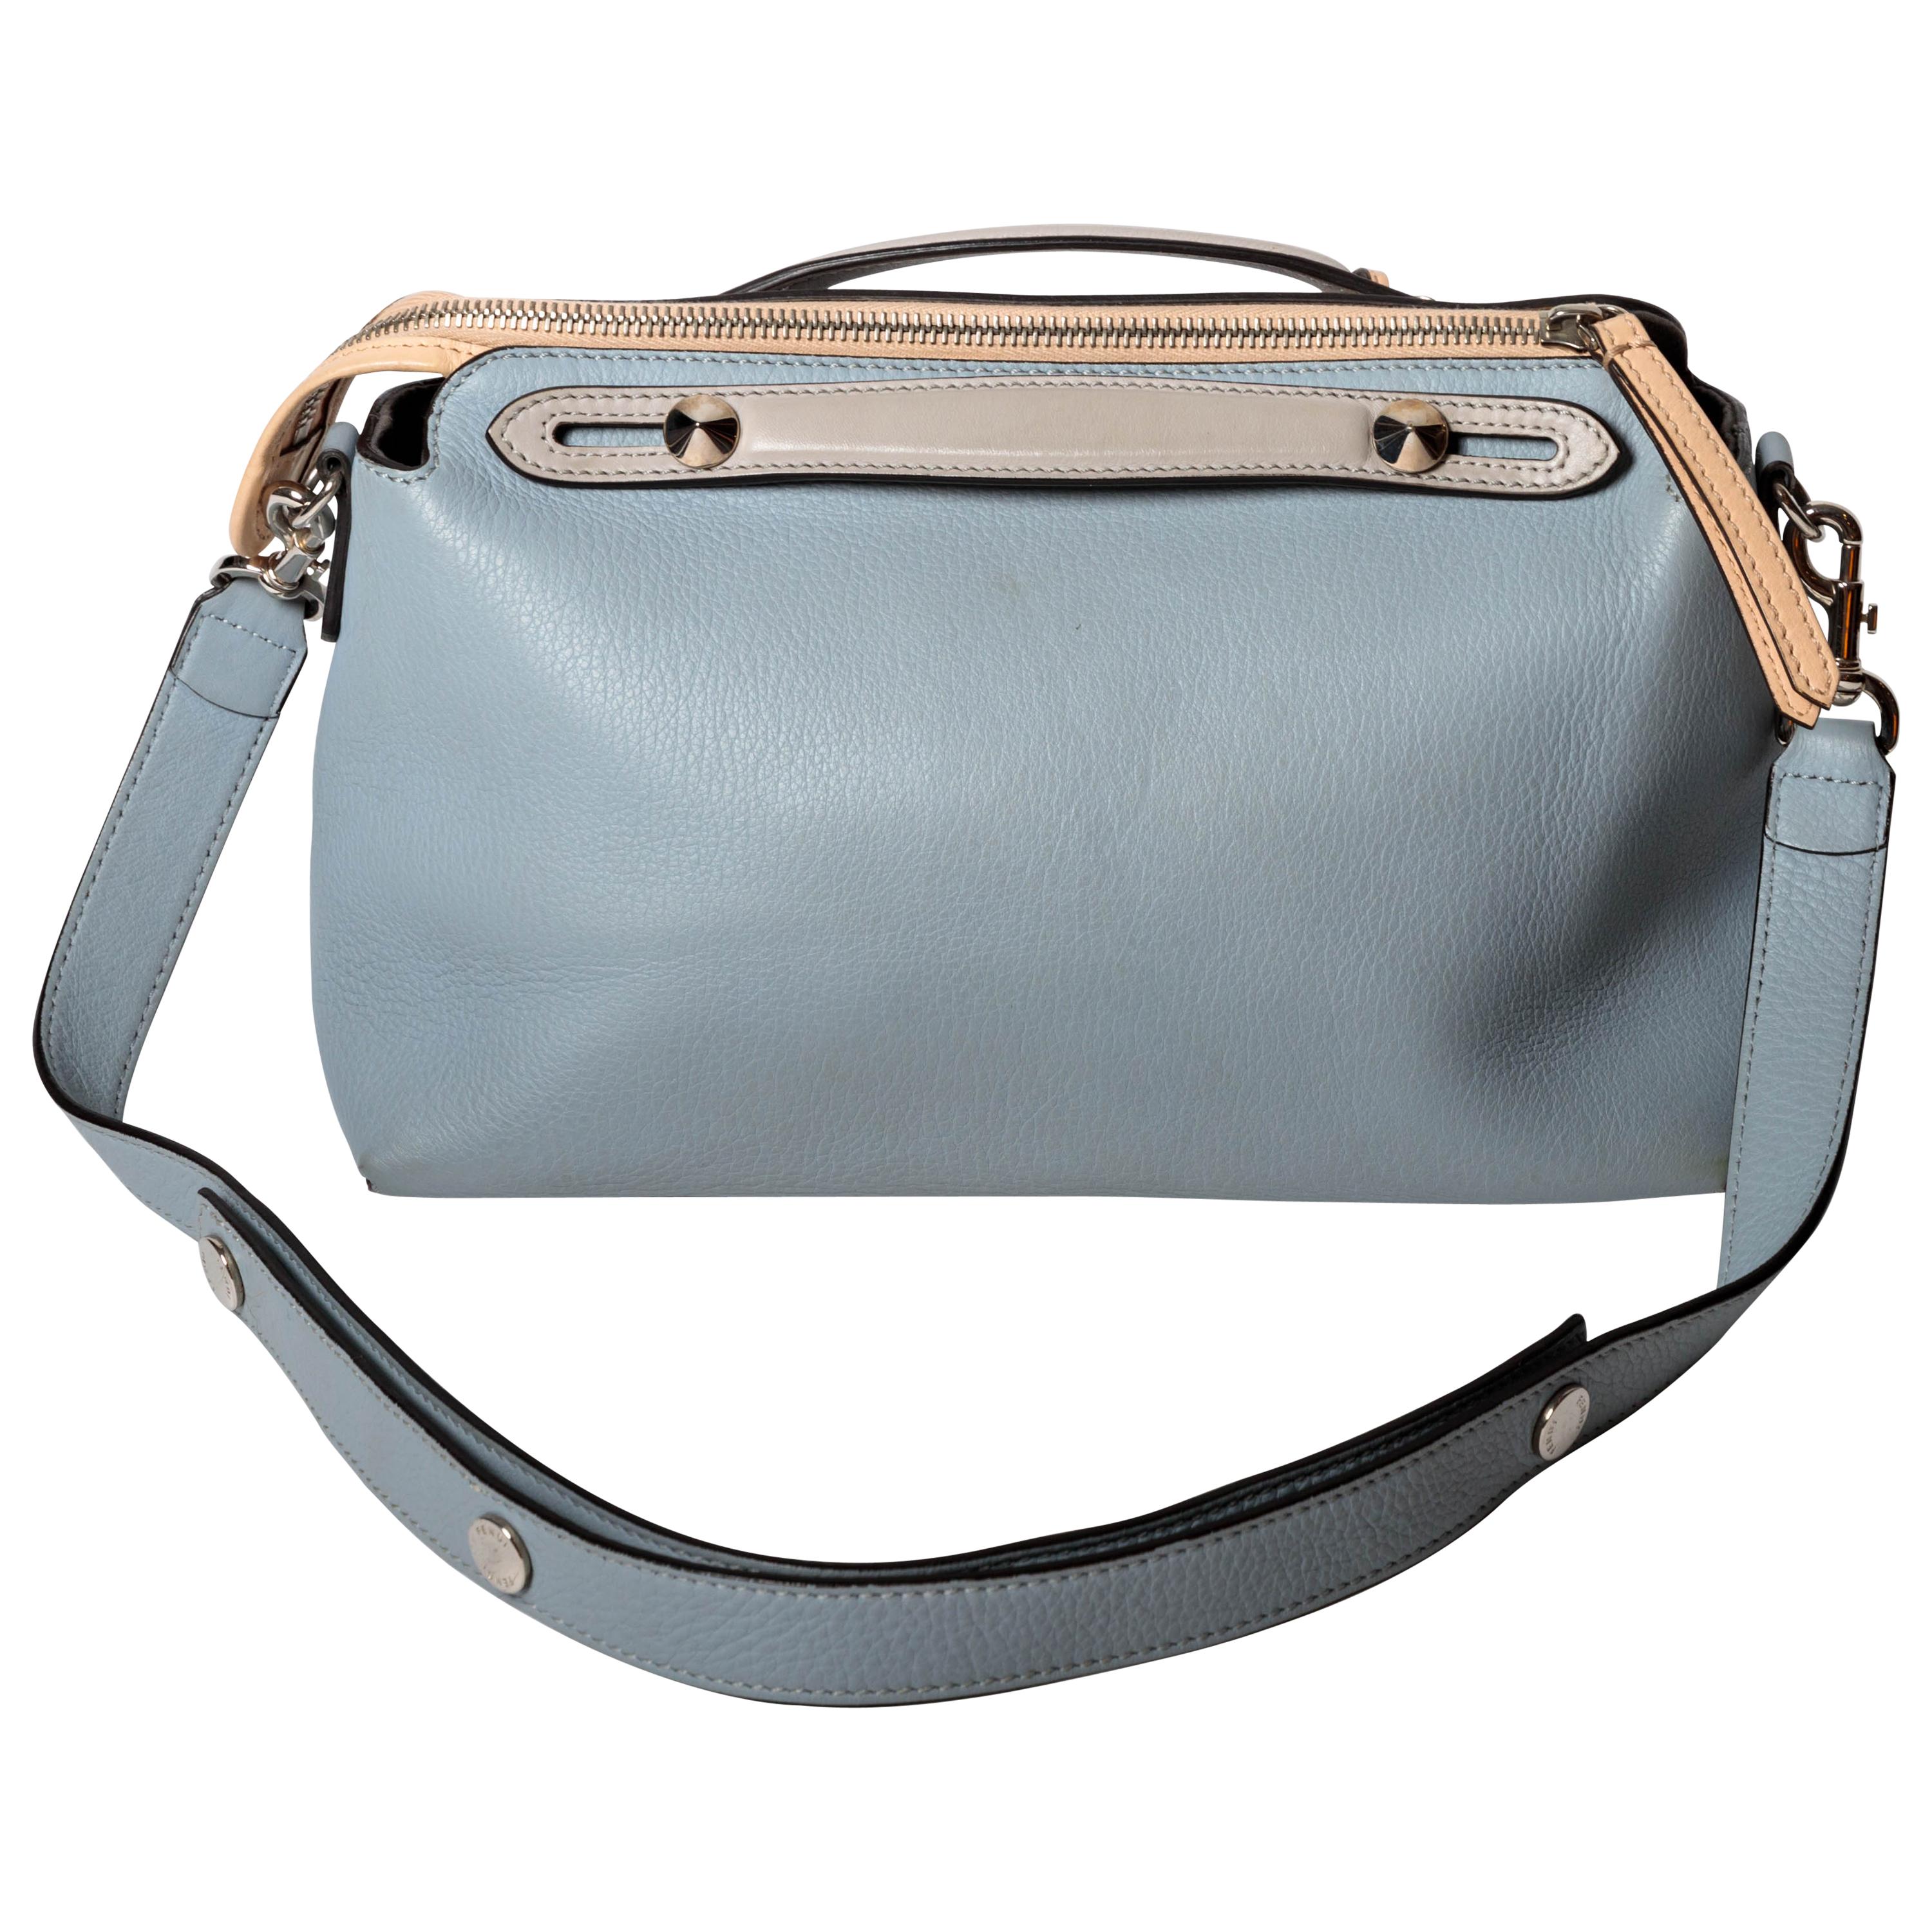 Fendi Top Handle Ice Blue Leather Bag with Detachable Shoulder Strap  For Sale